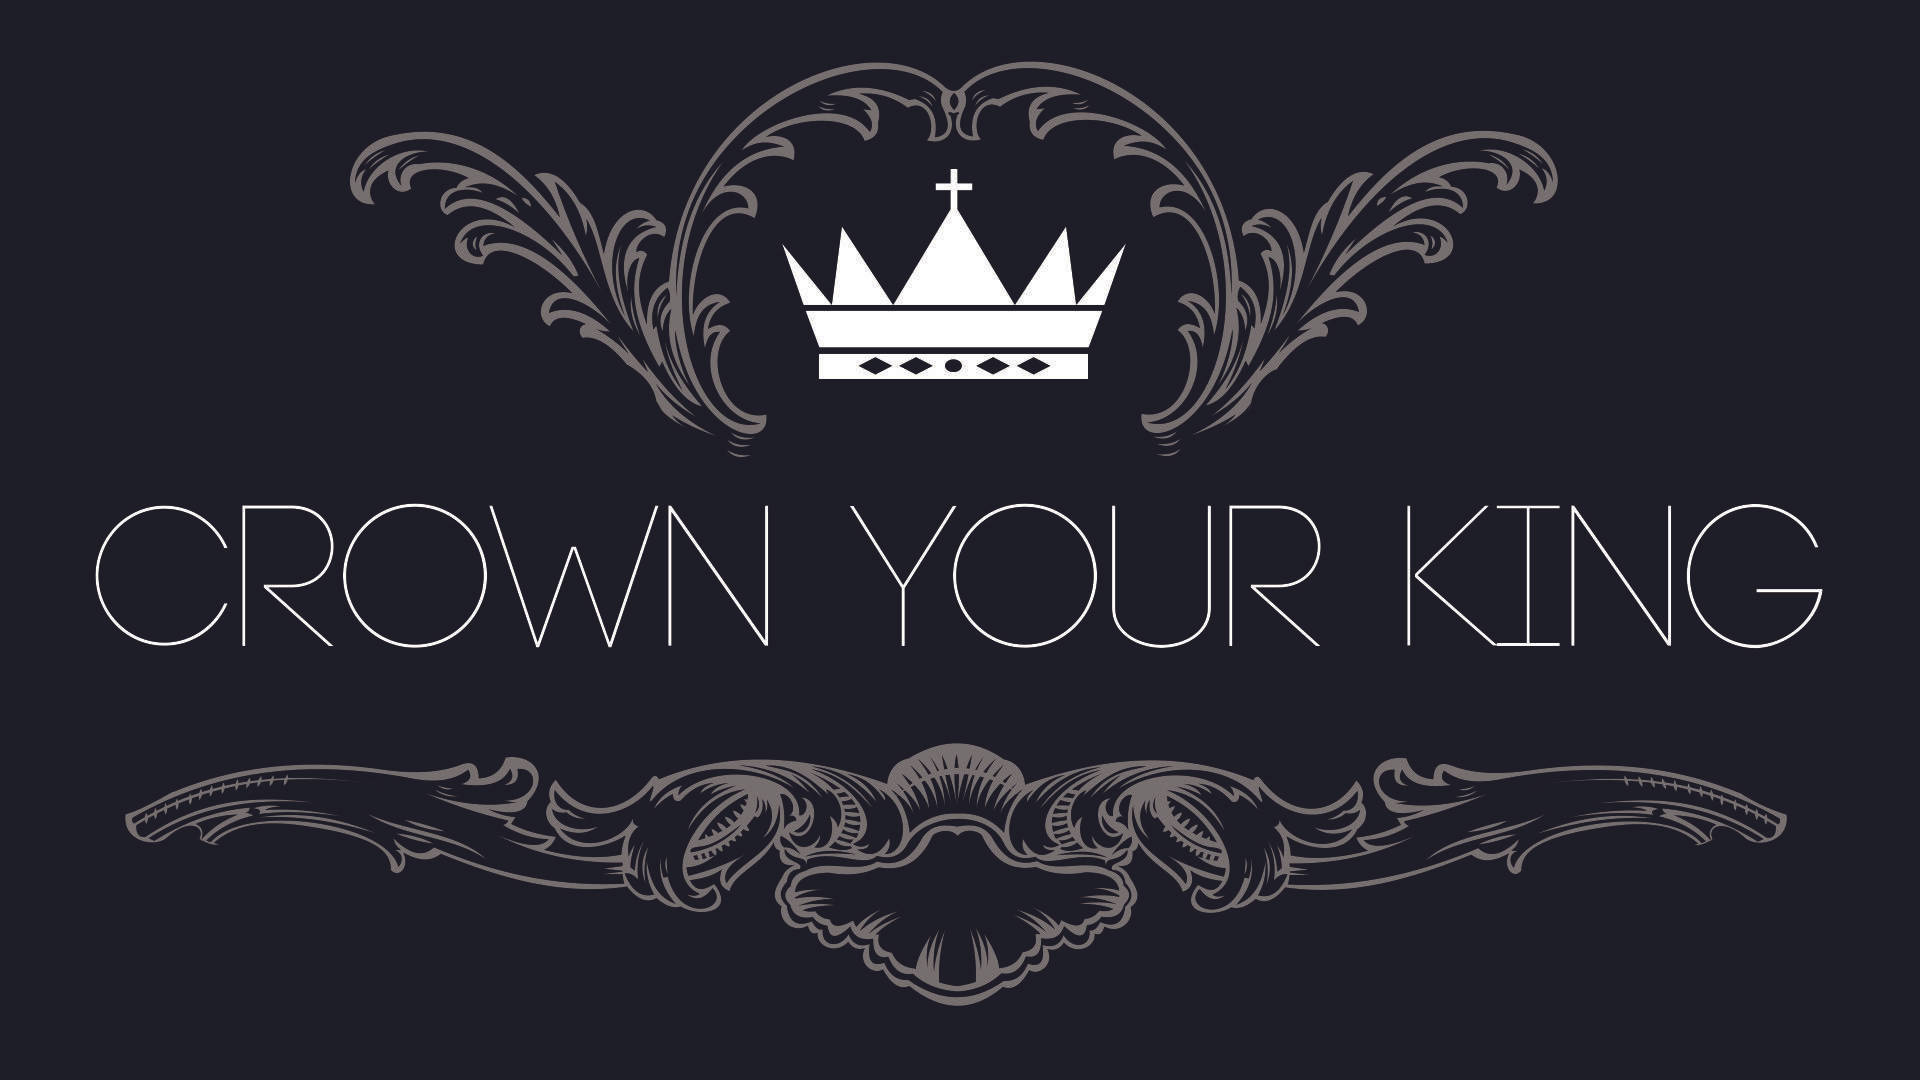 Download Black Crown Your King Wallpaper